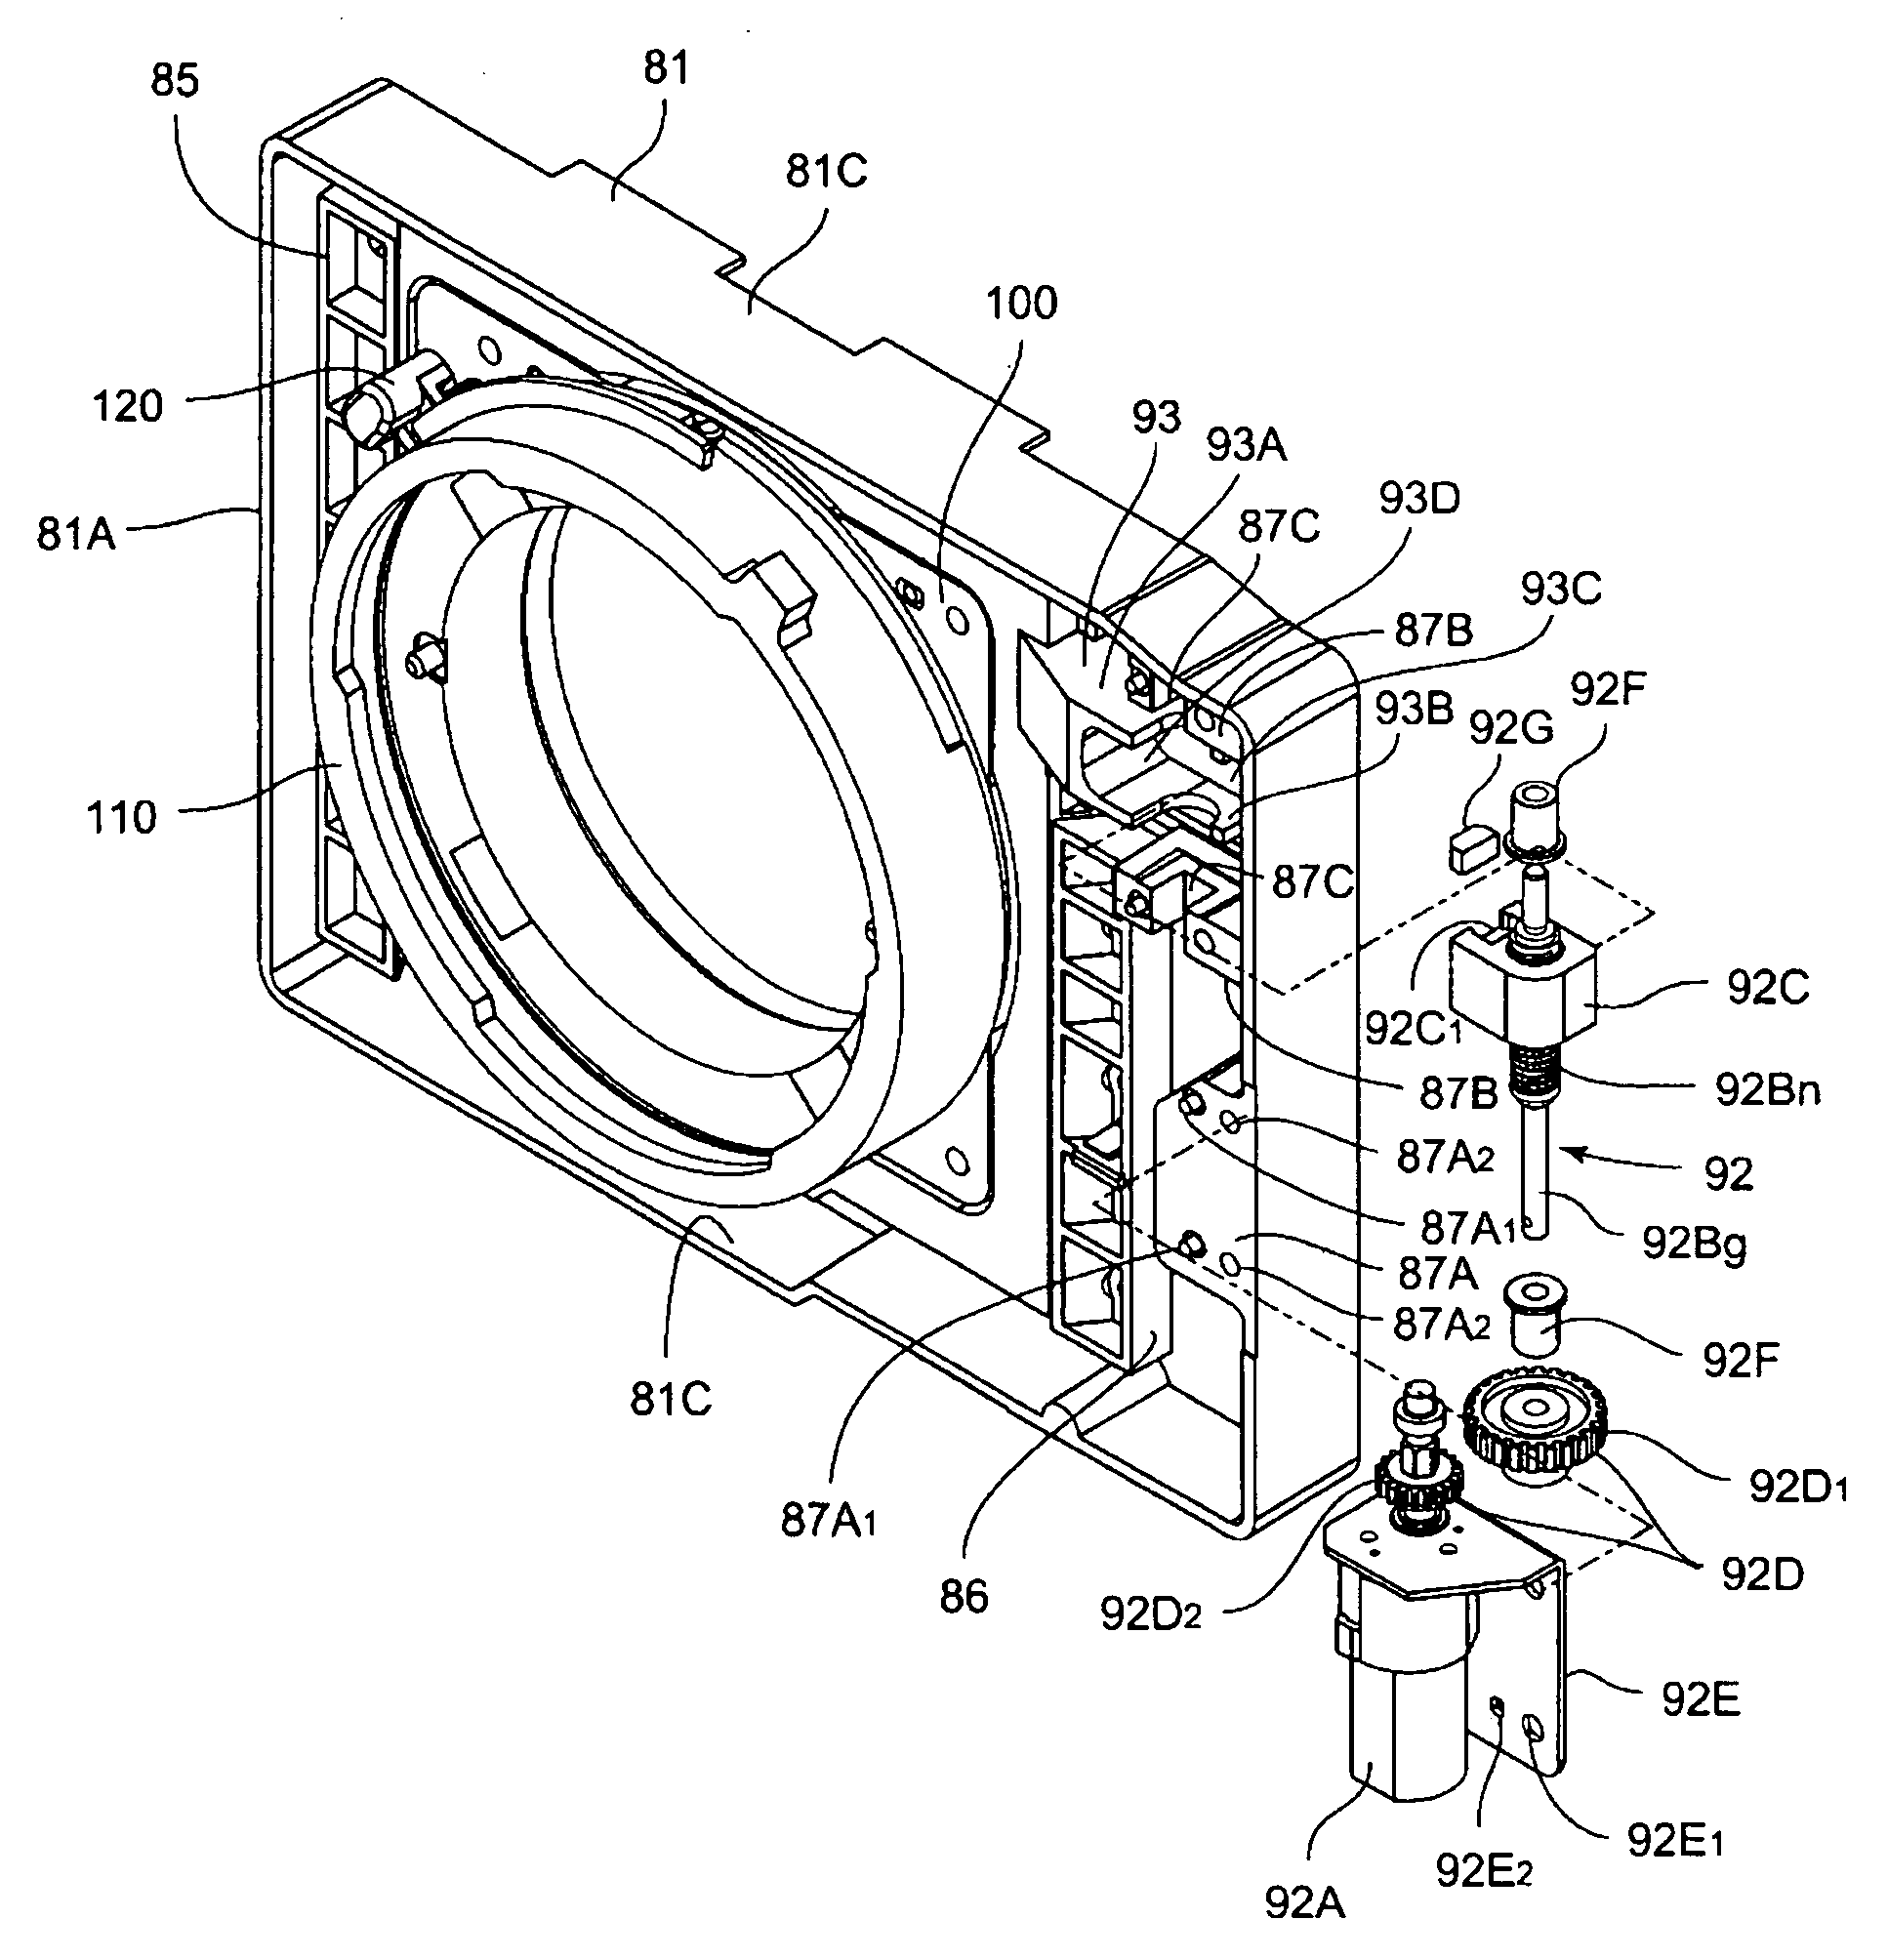 Projection display apparatus